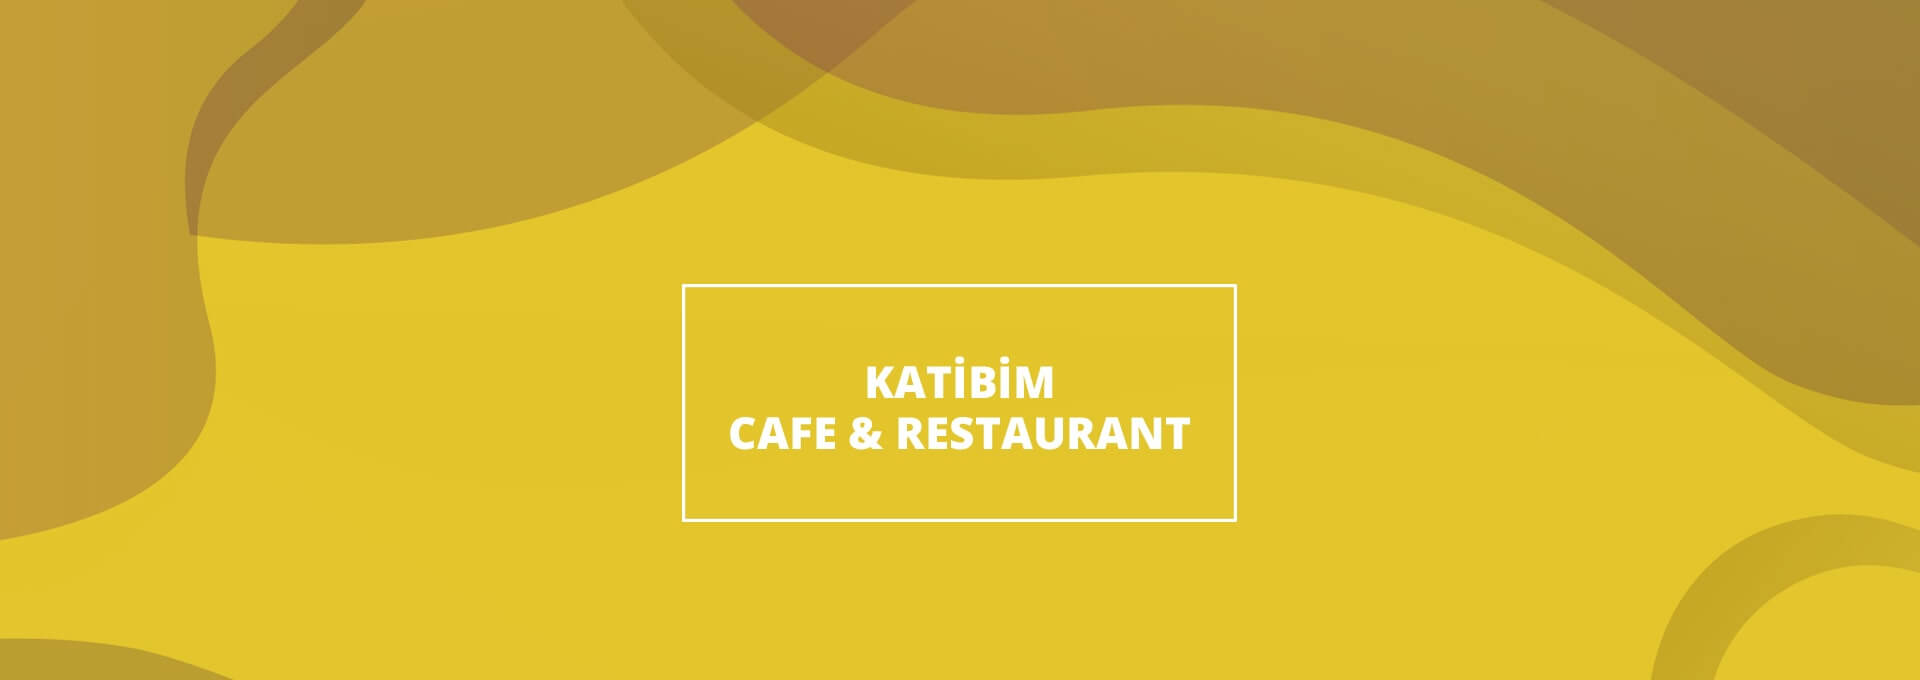 Katibim Cafe Restaurant